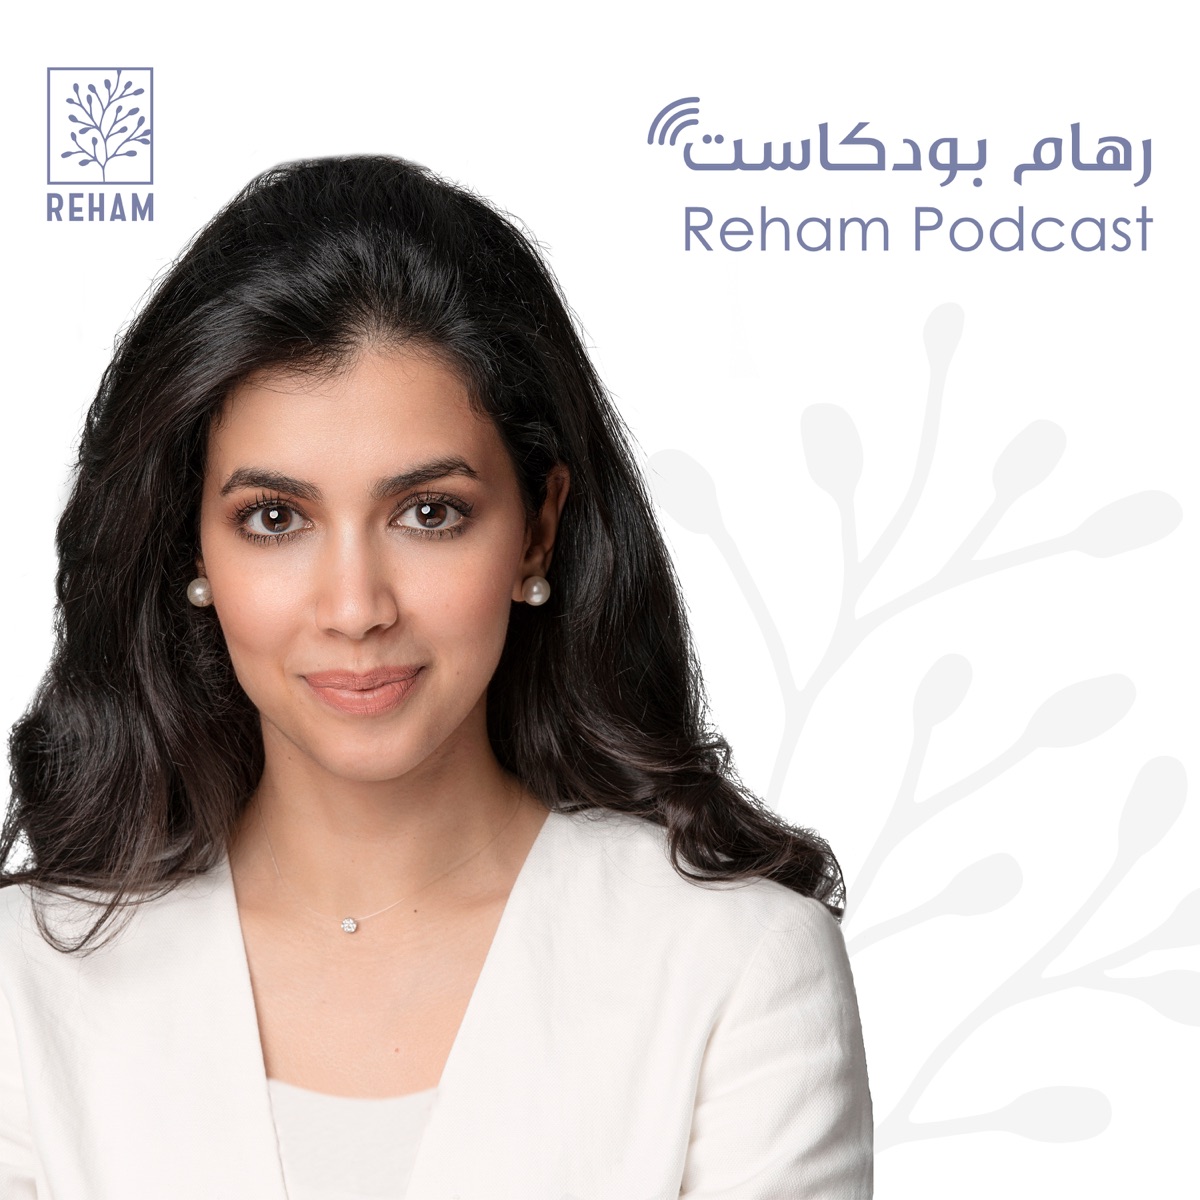 Reham Podcast with Reham Al-Rashidi